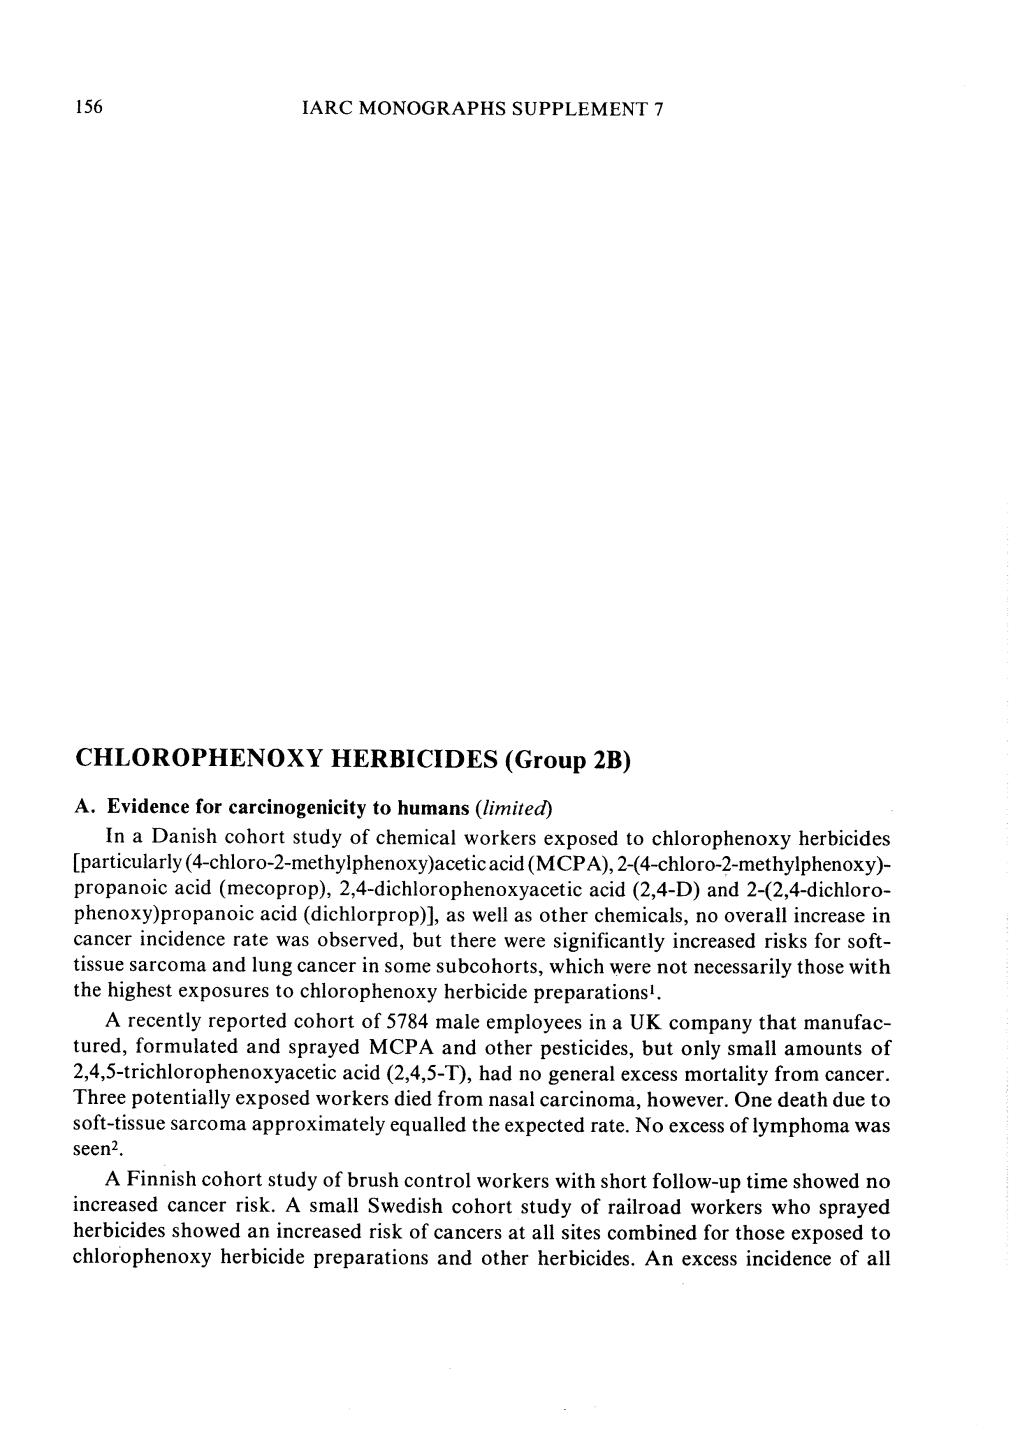 Chlorophenoxy Herbicides